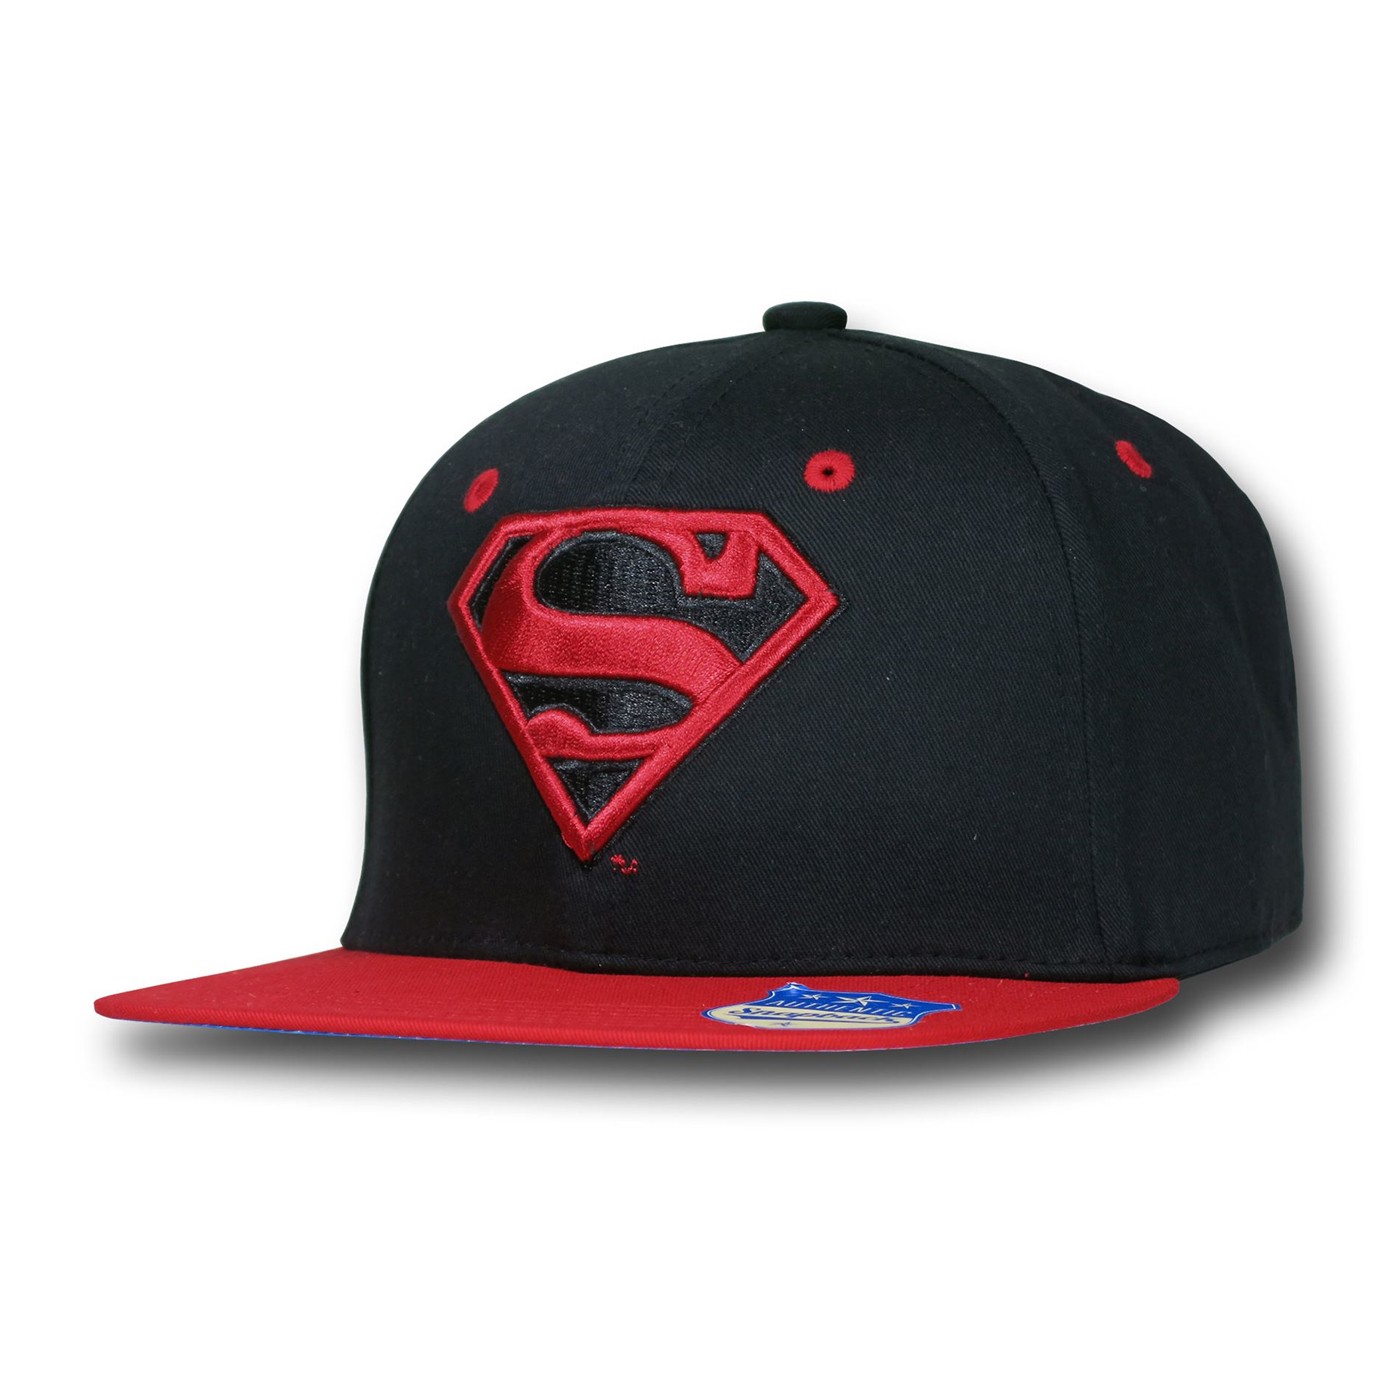 Superman Black & Red Sublimated Flat Billed Cap